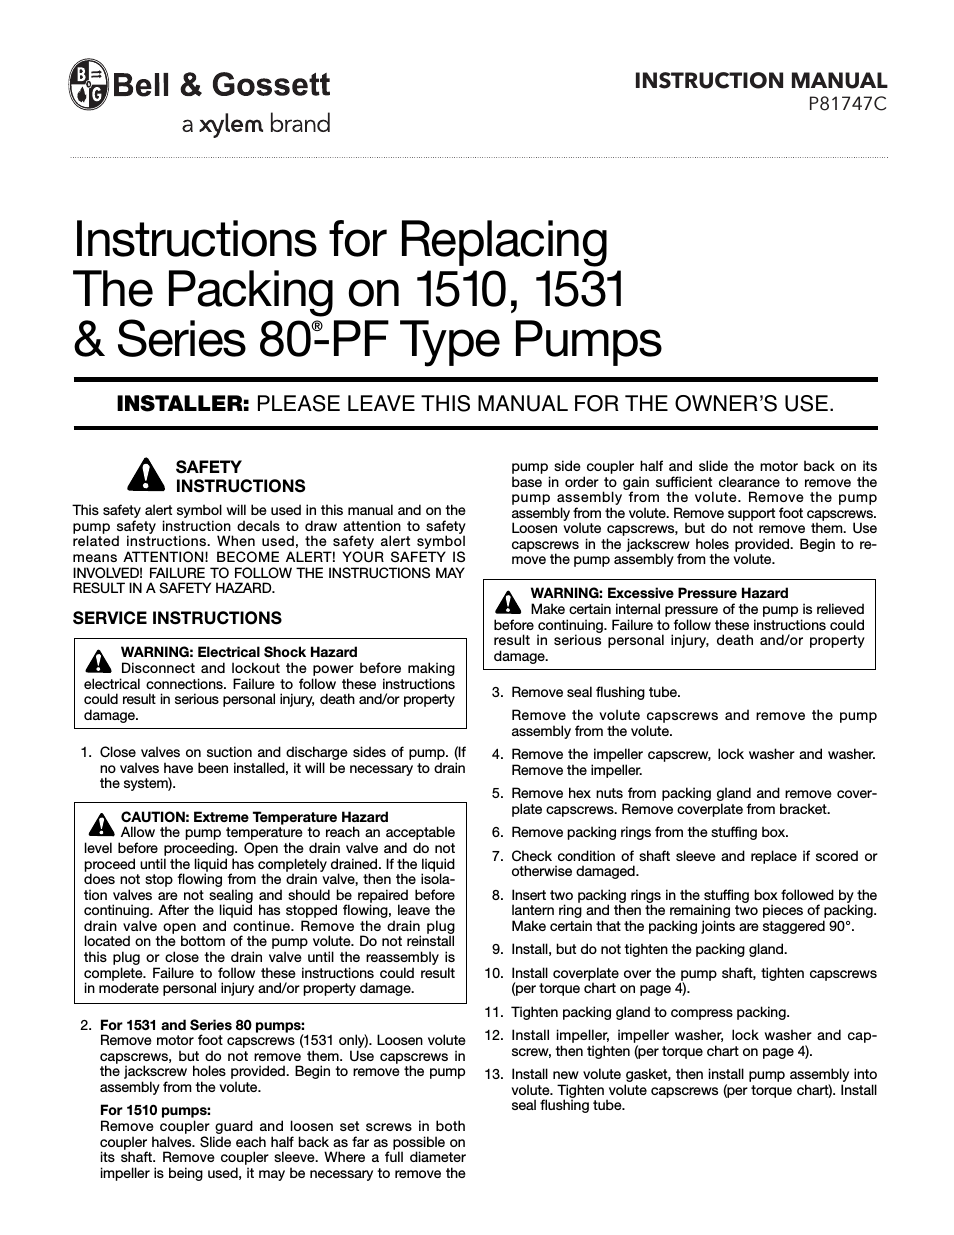 Series 80®-PF Type Pumps